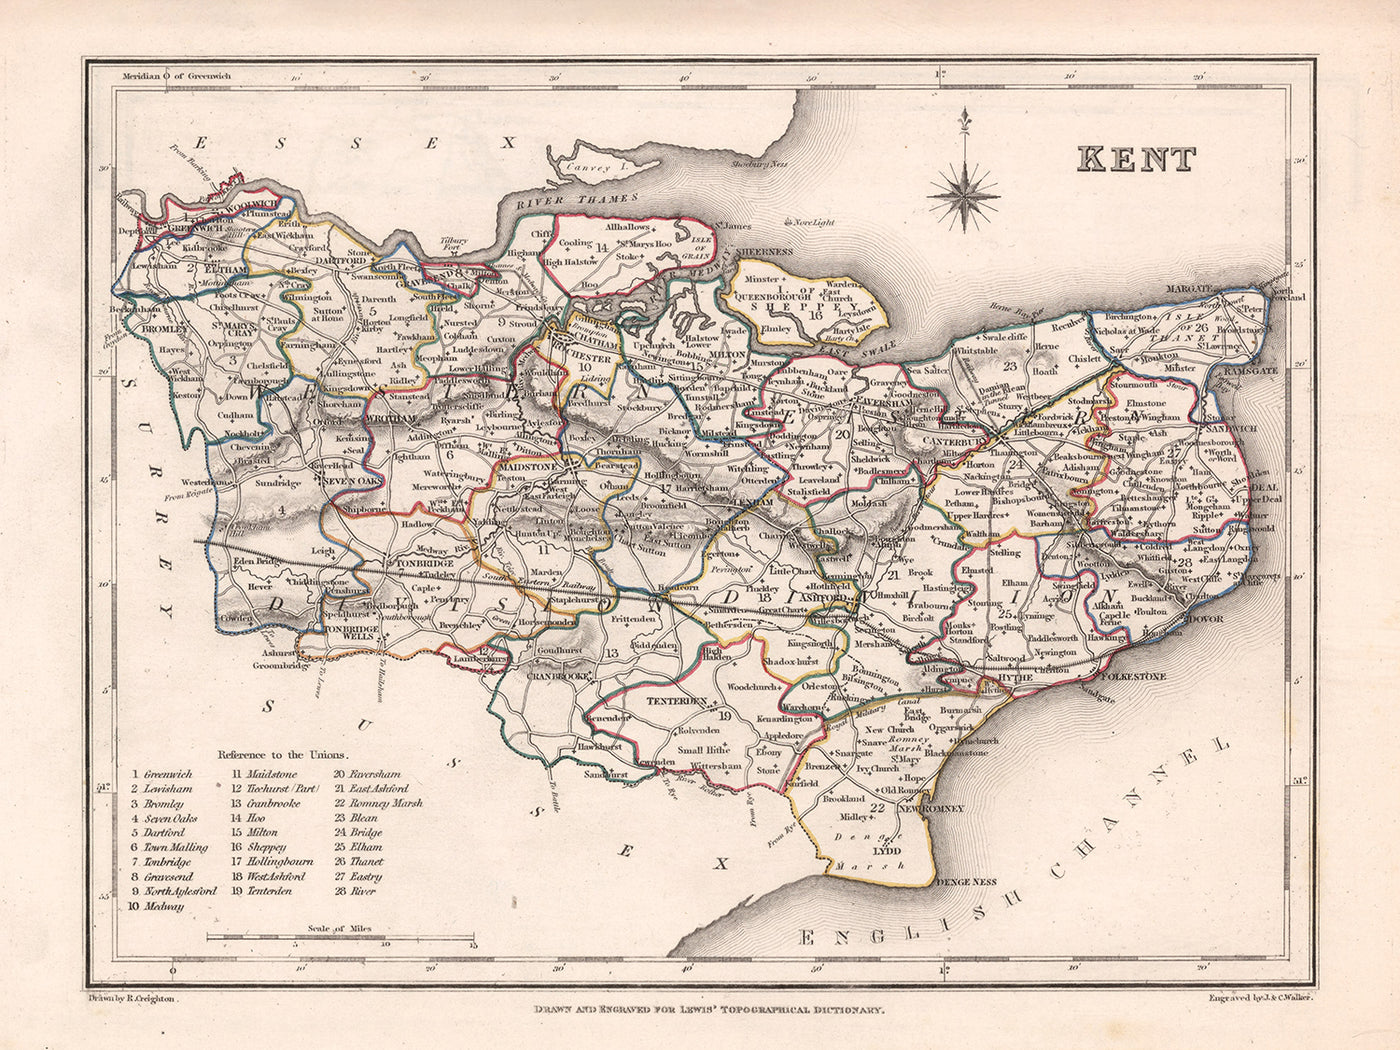 Old Map of Kent by Samuel Lewis, 1844: Maidstone, Gillingham, Ashford, Royal Tunbridge Wells, and Margate